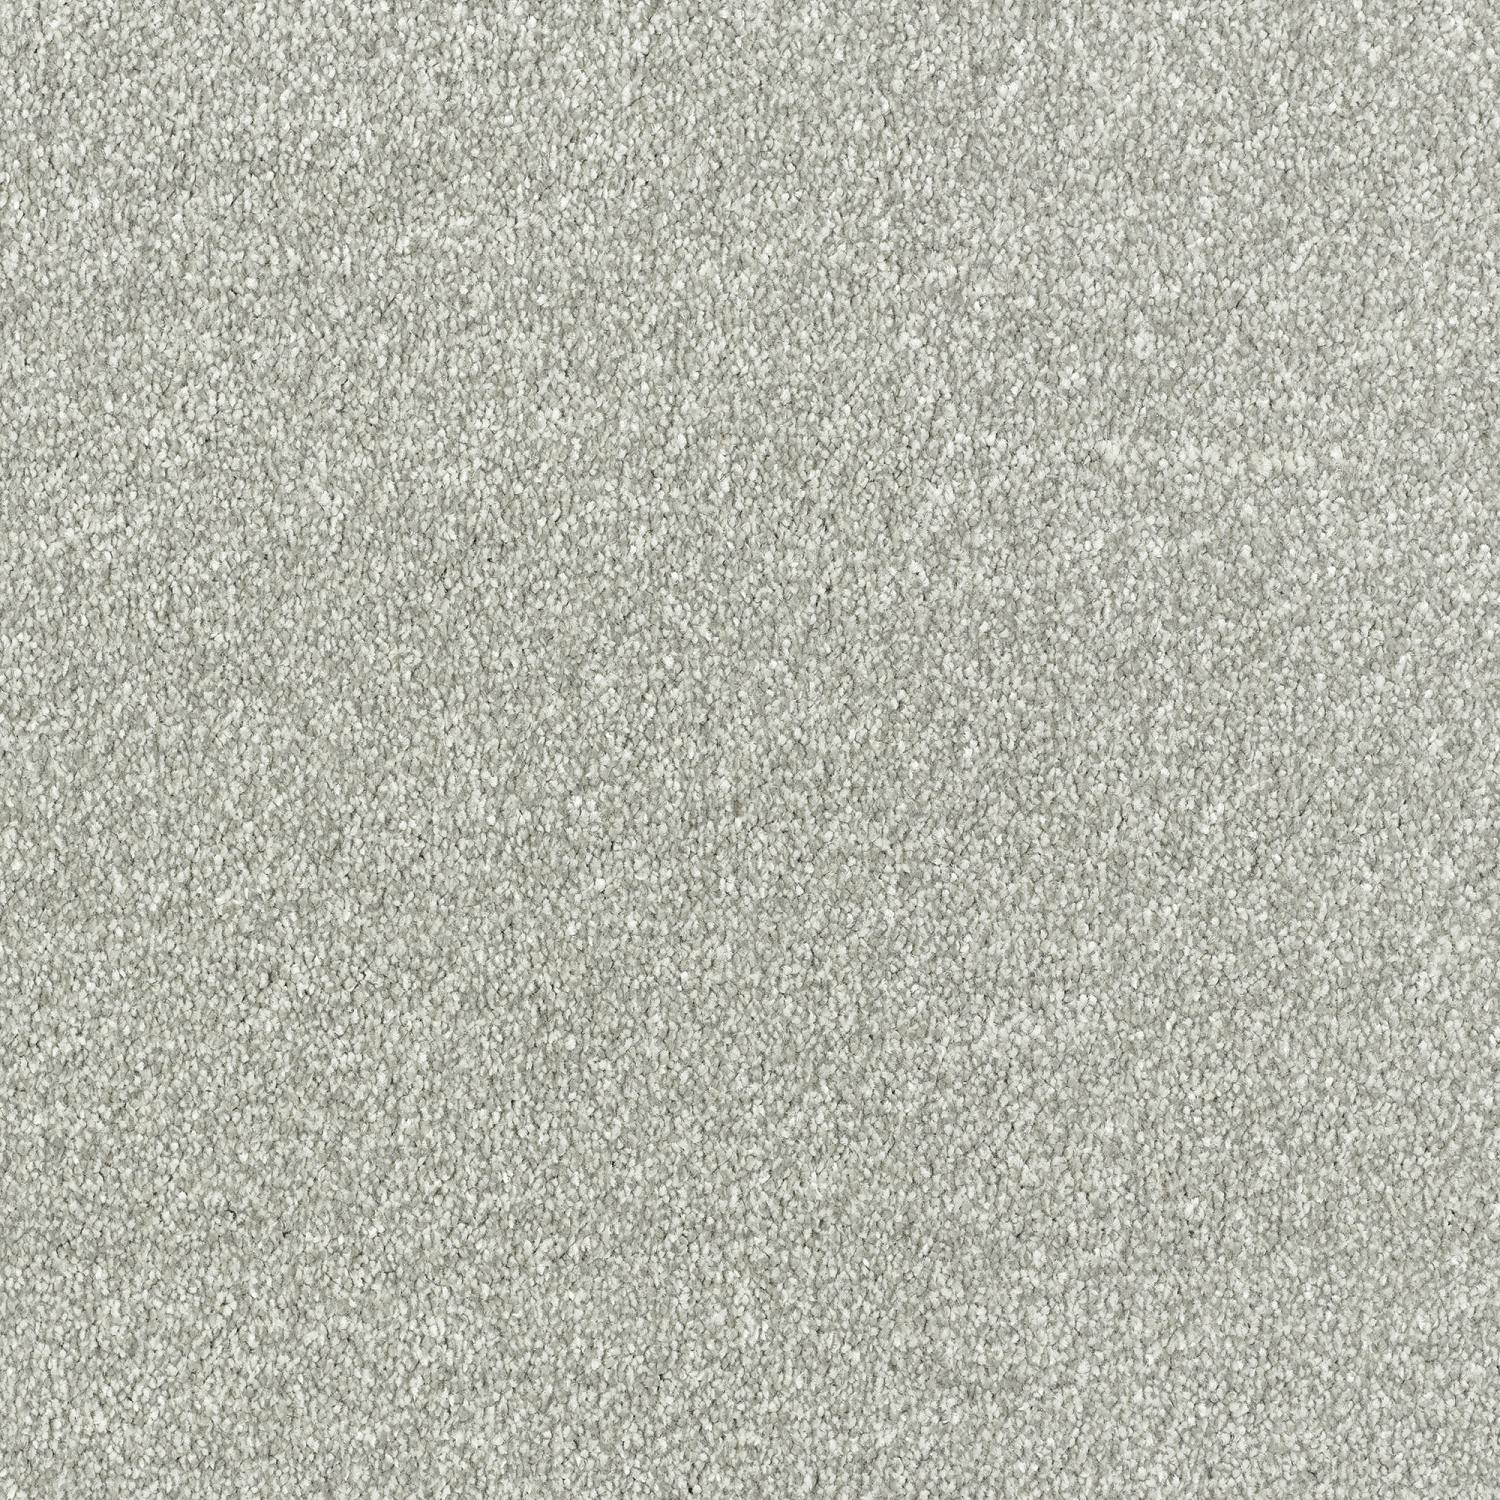 Stainfree Maximus Saxony Carpet - Satin Silver